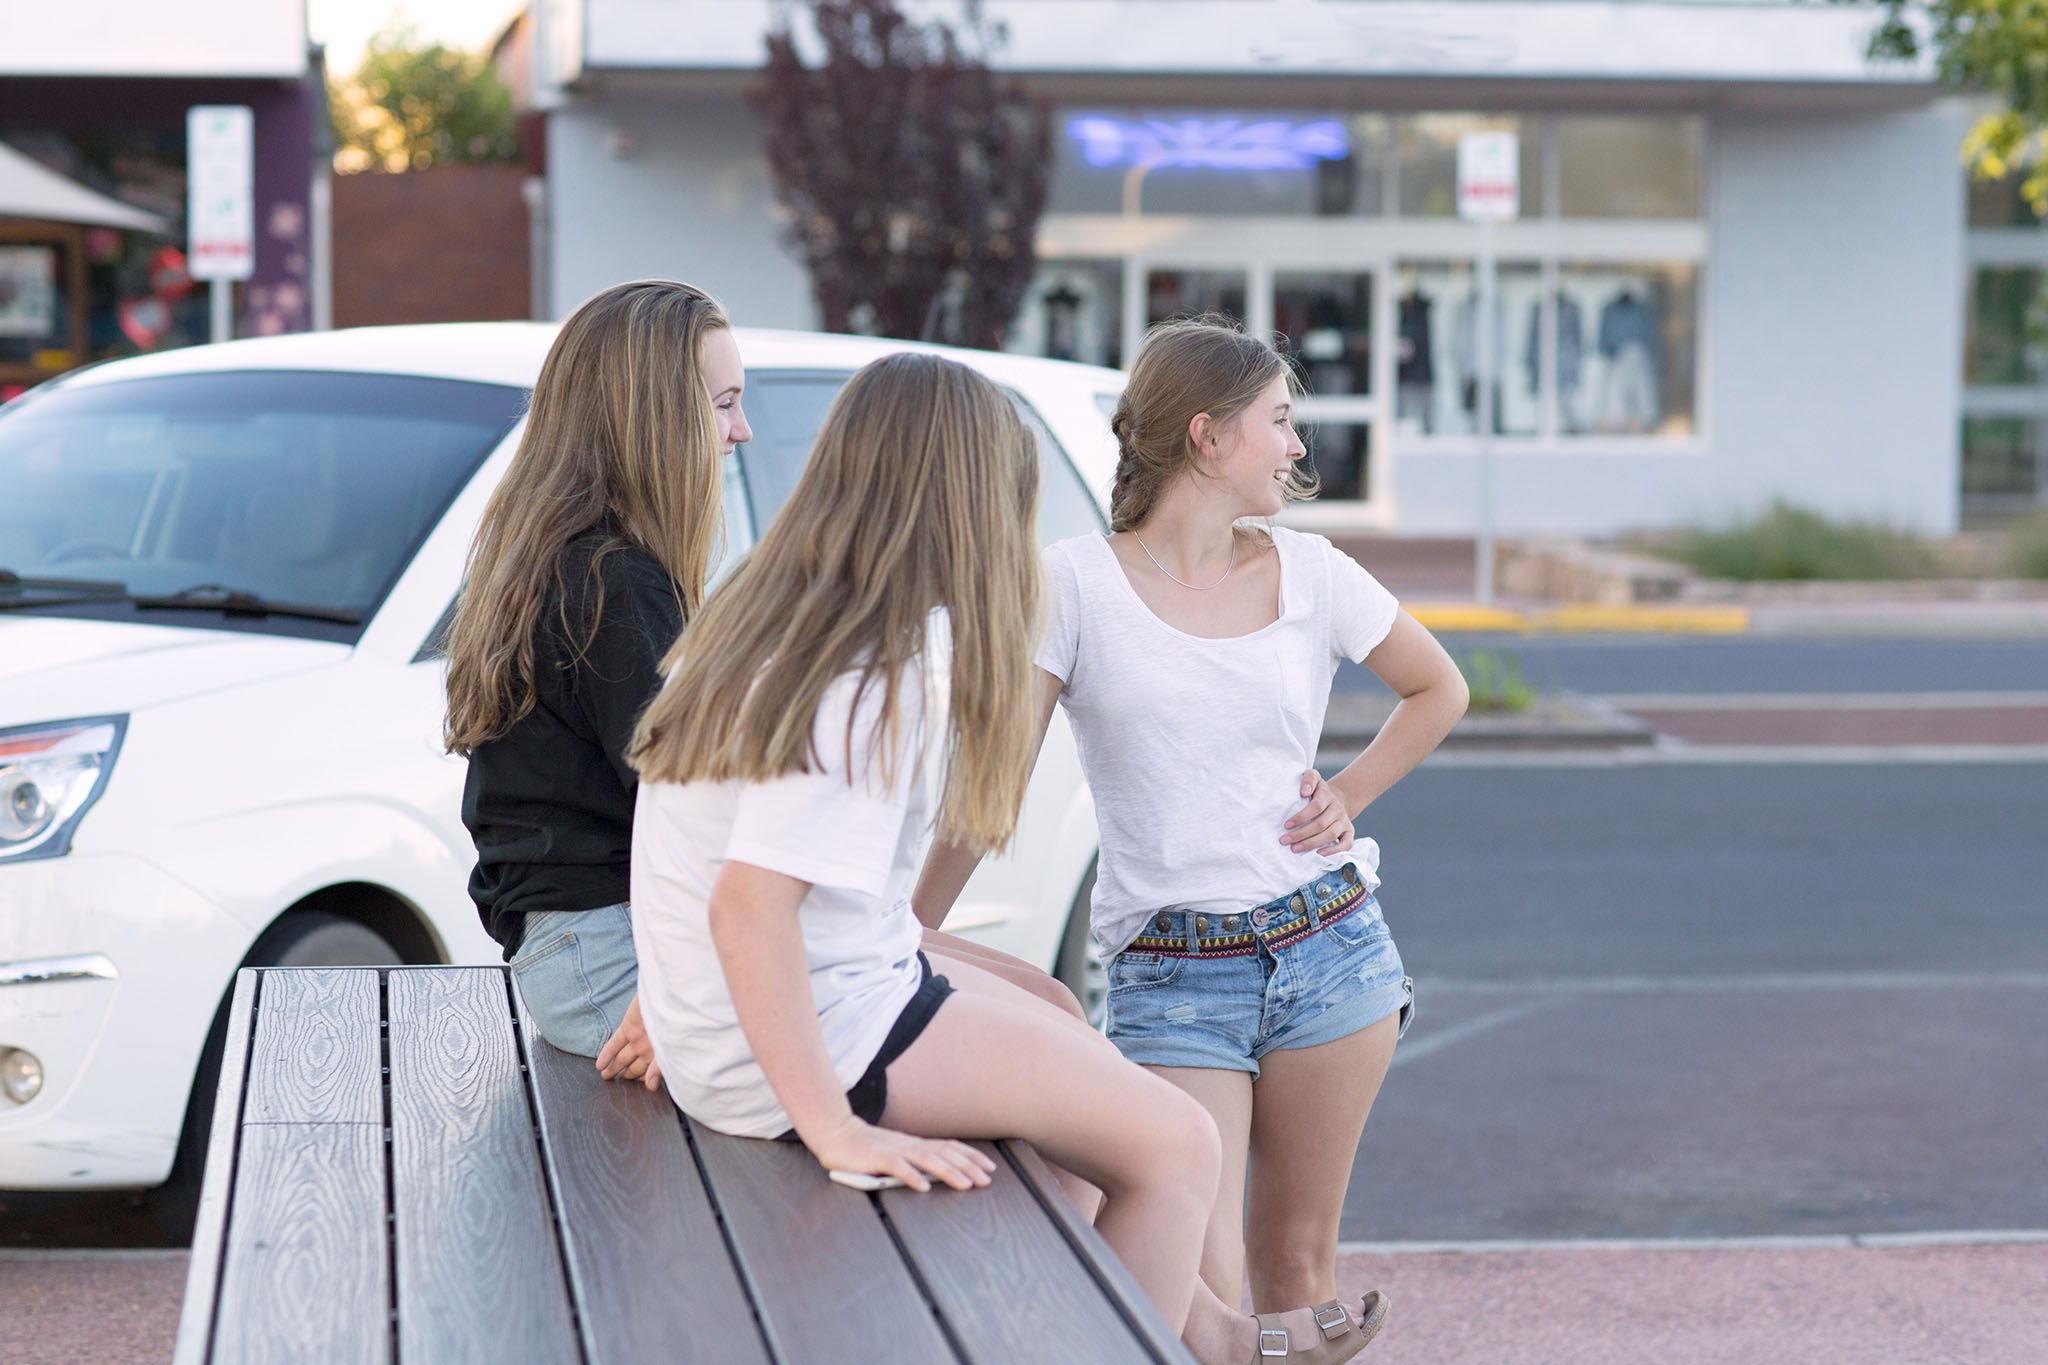 Stock photo of three teenage girls in the street, by caro telfer, photographer